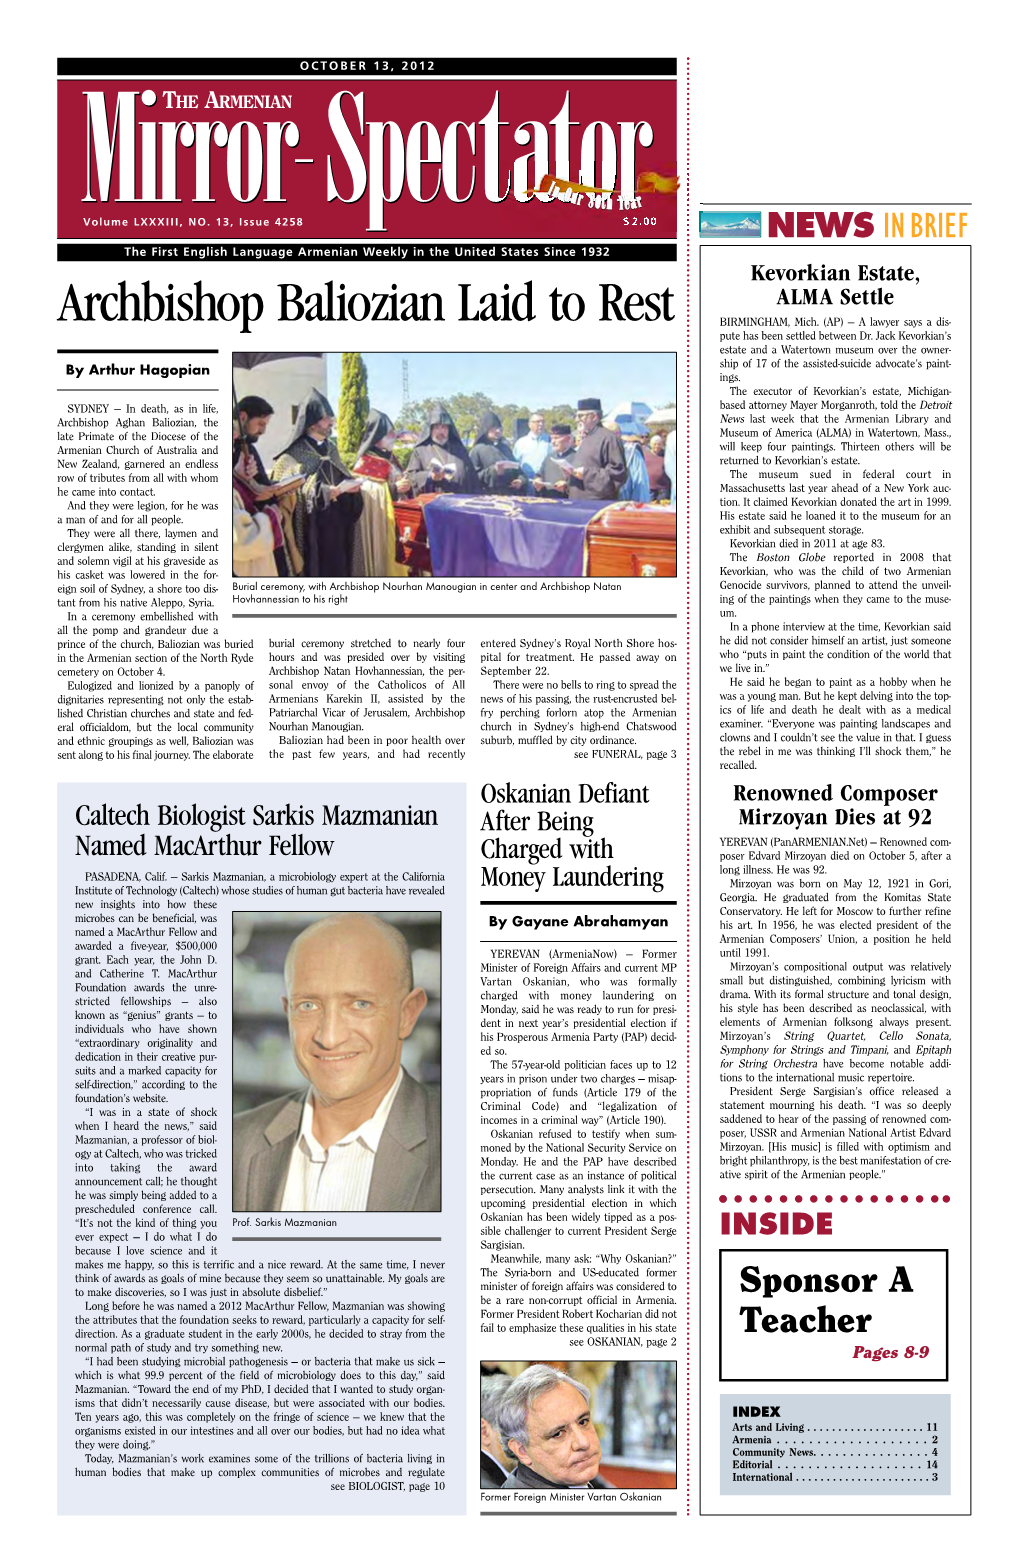 Archbishop Baliozian Laid to Rest ALMA Settle BIRMINGHAM, Mich